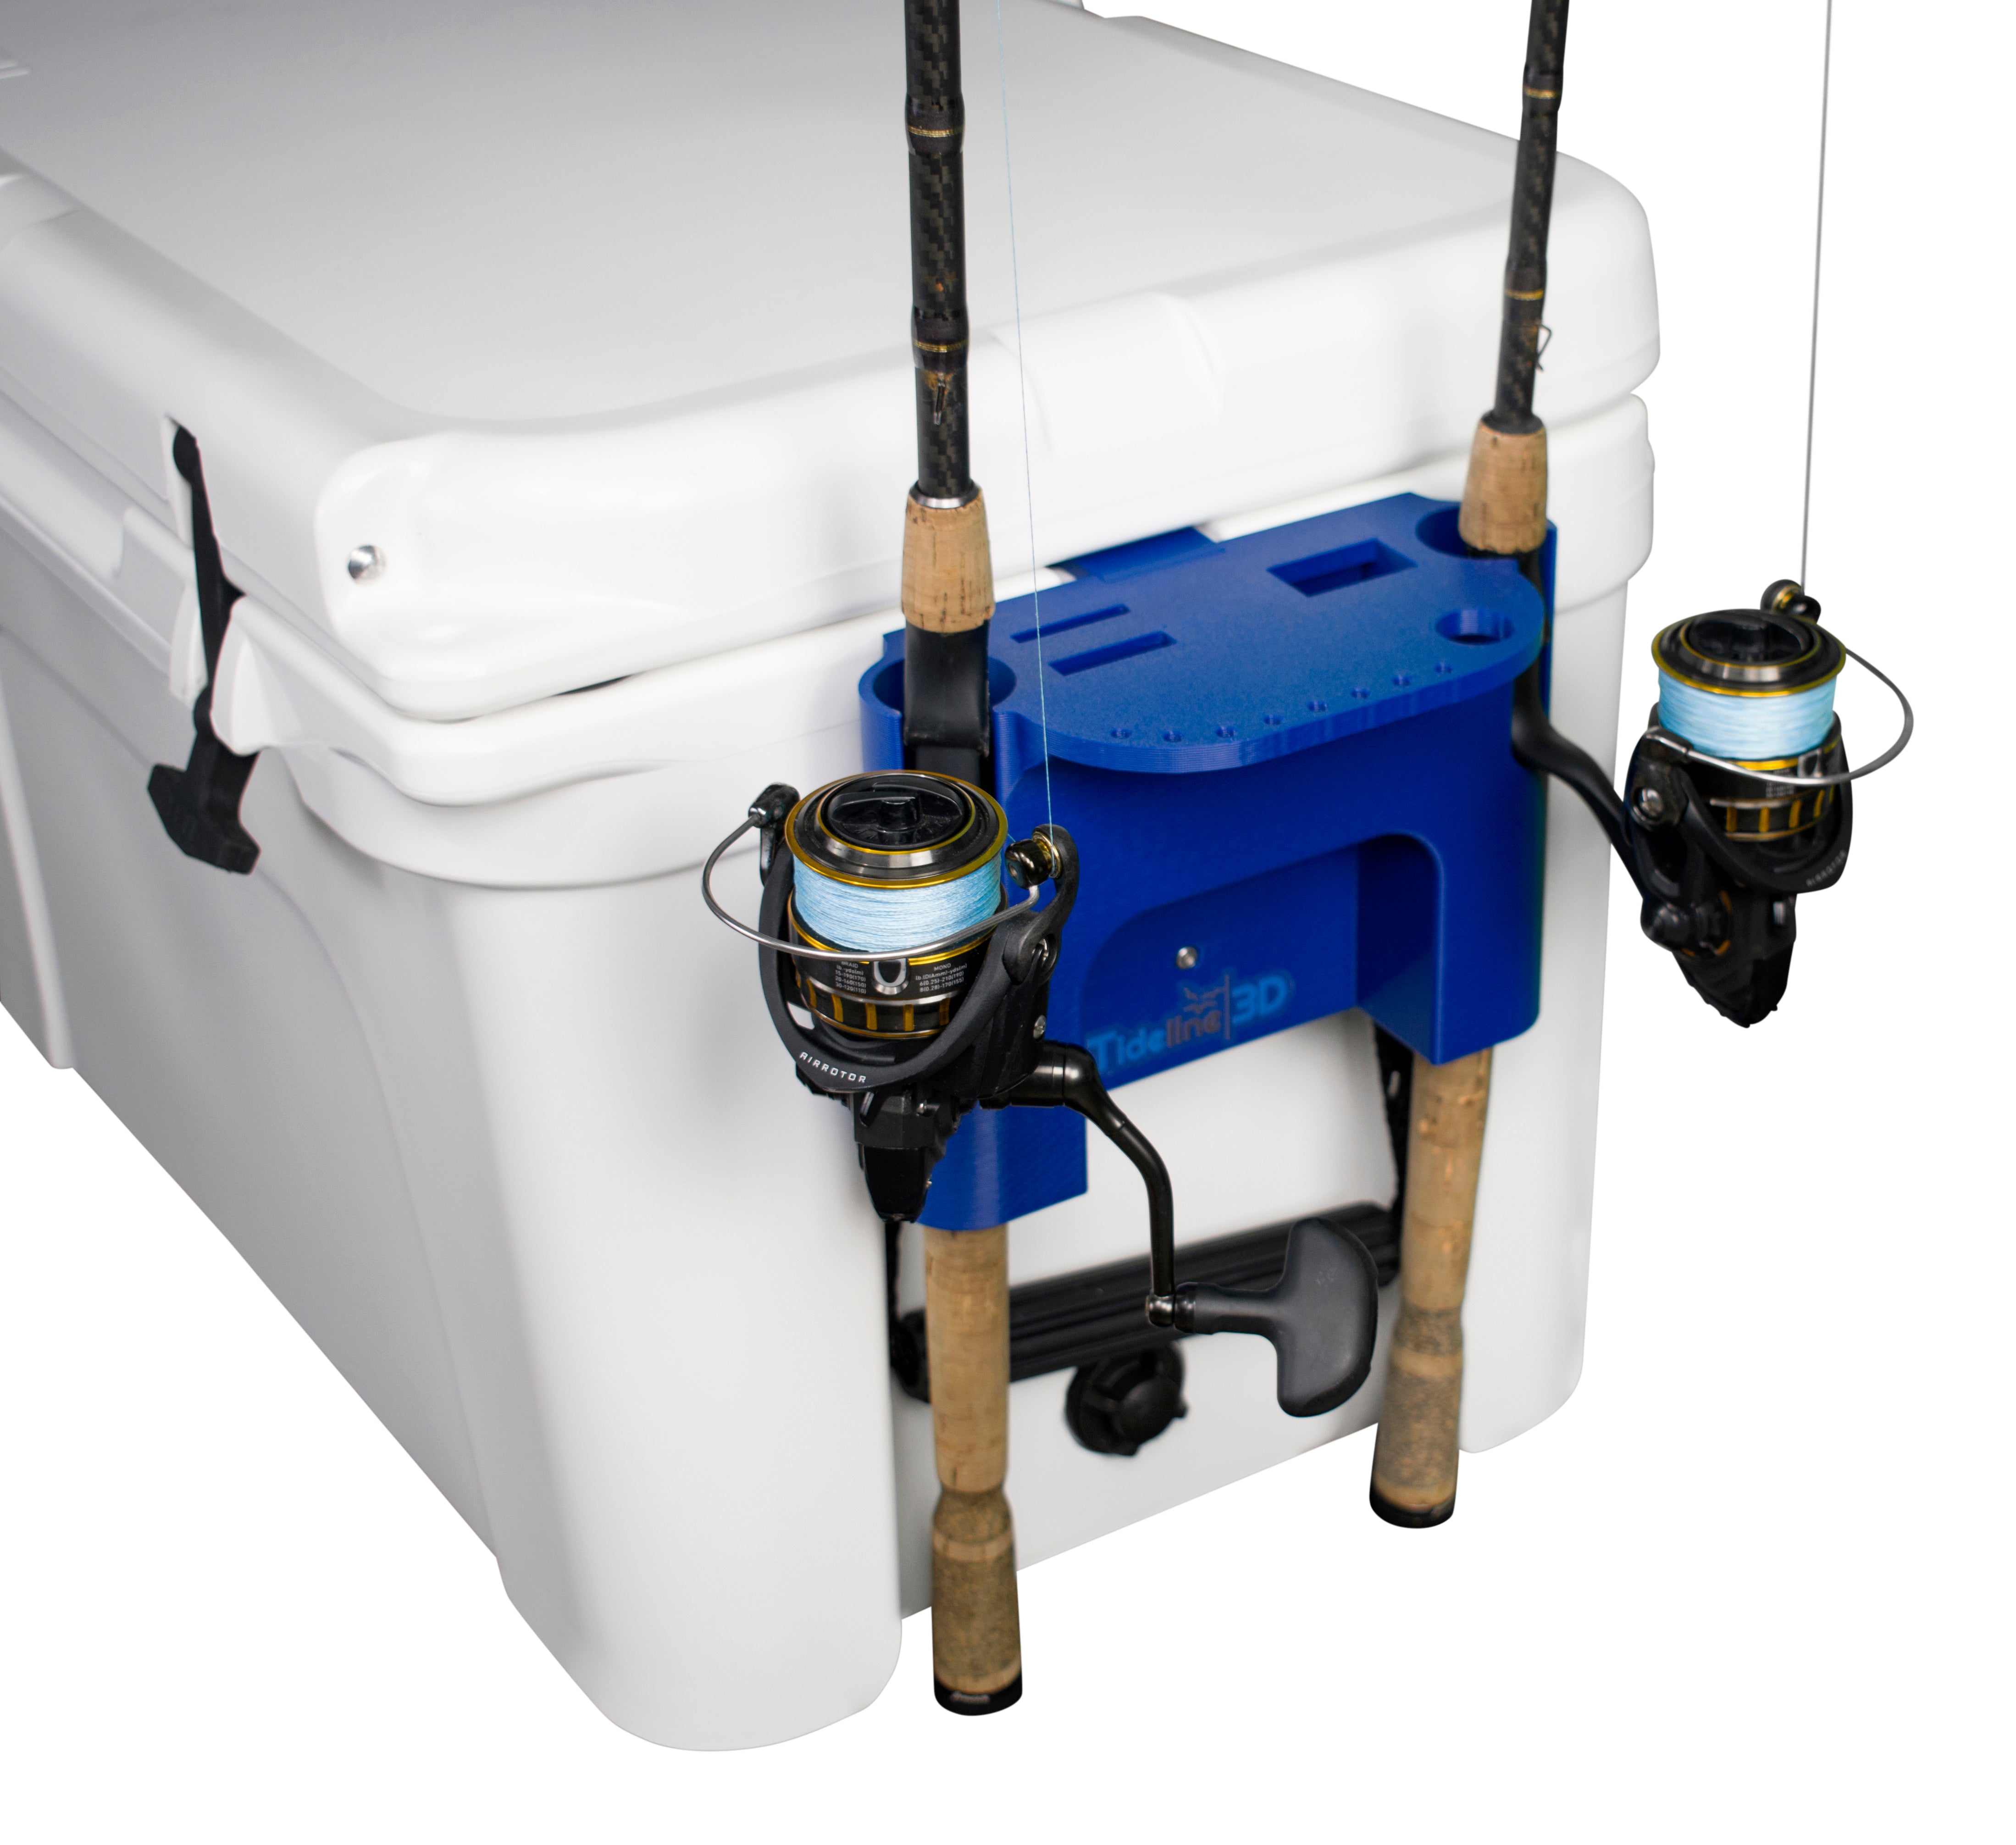 Fishing Rod Holder for YETI Tundra Coolers